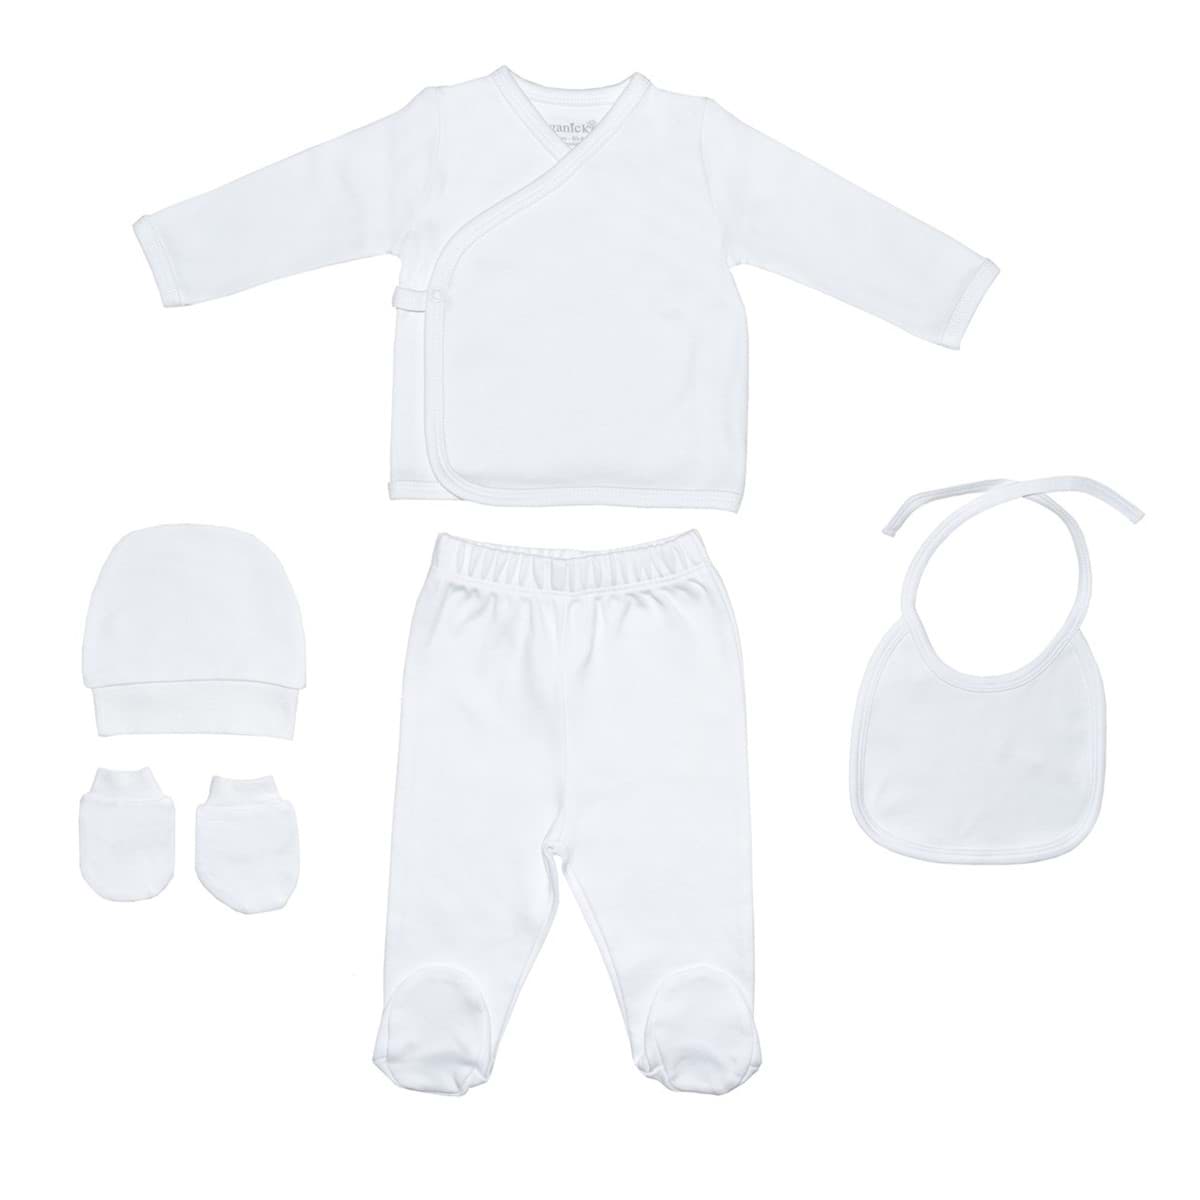 Picture of Basic White Newborn Set of 5